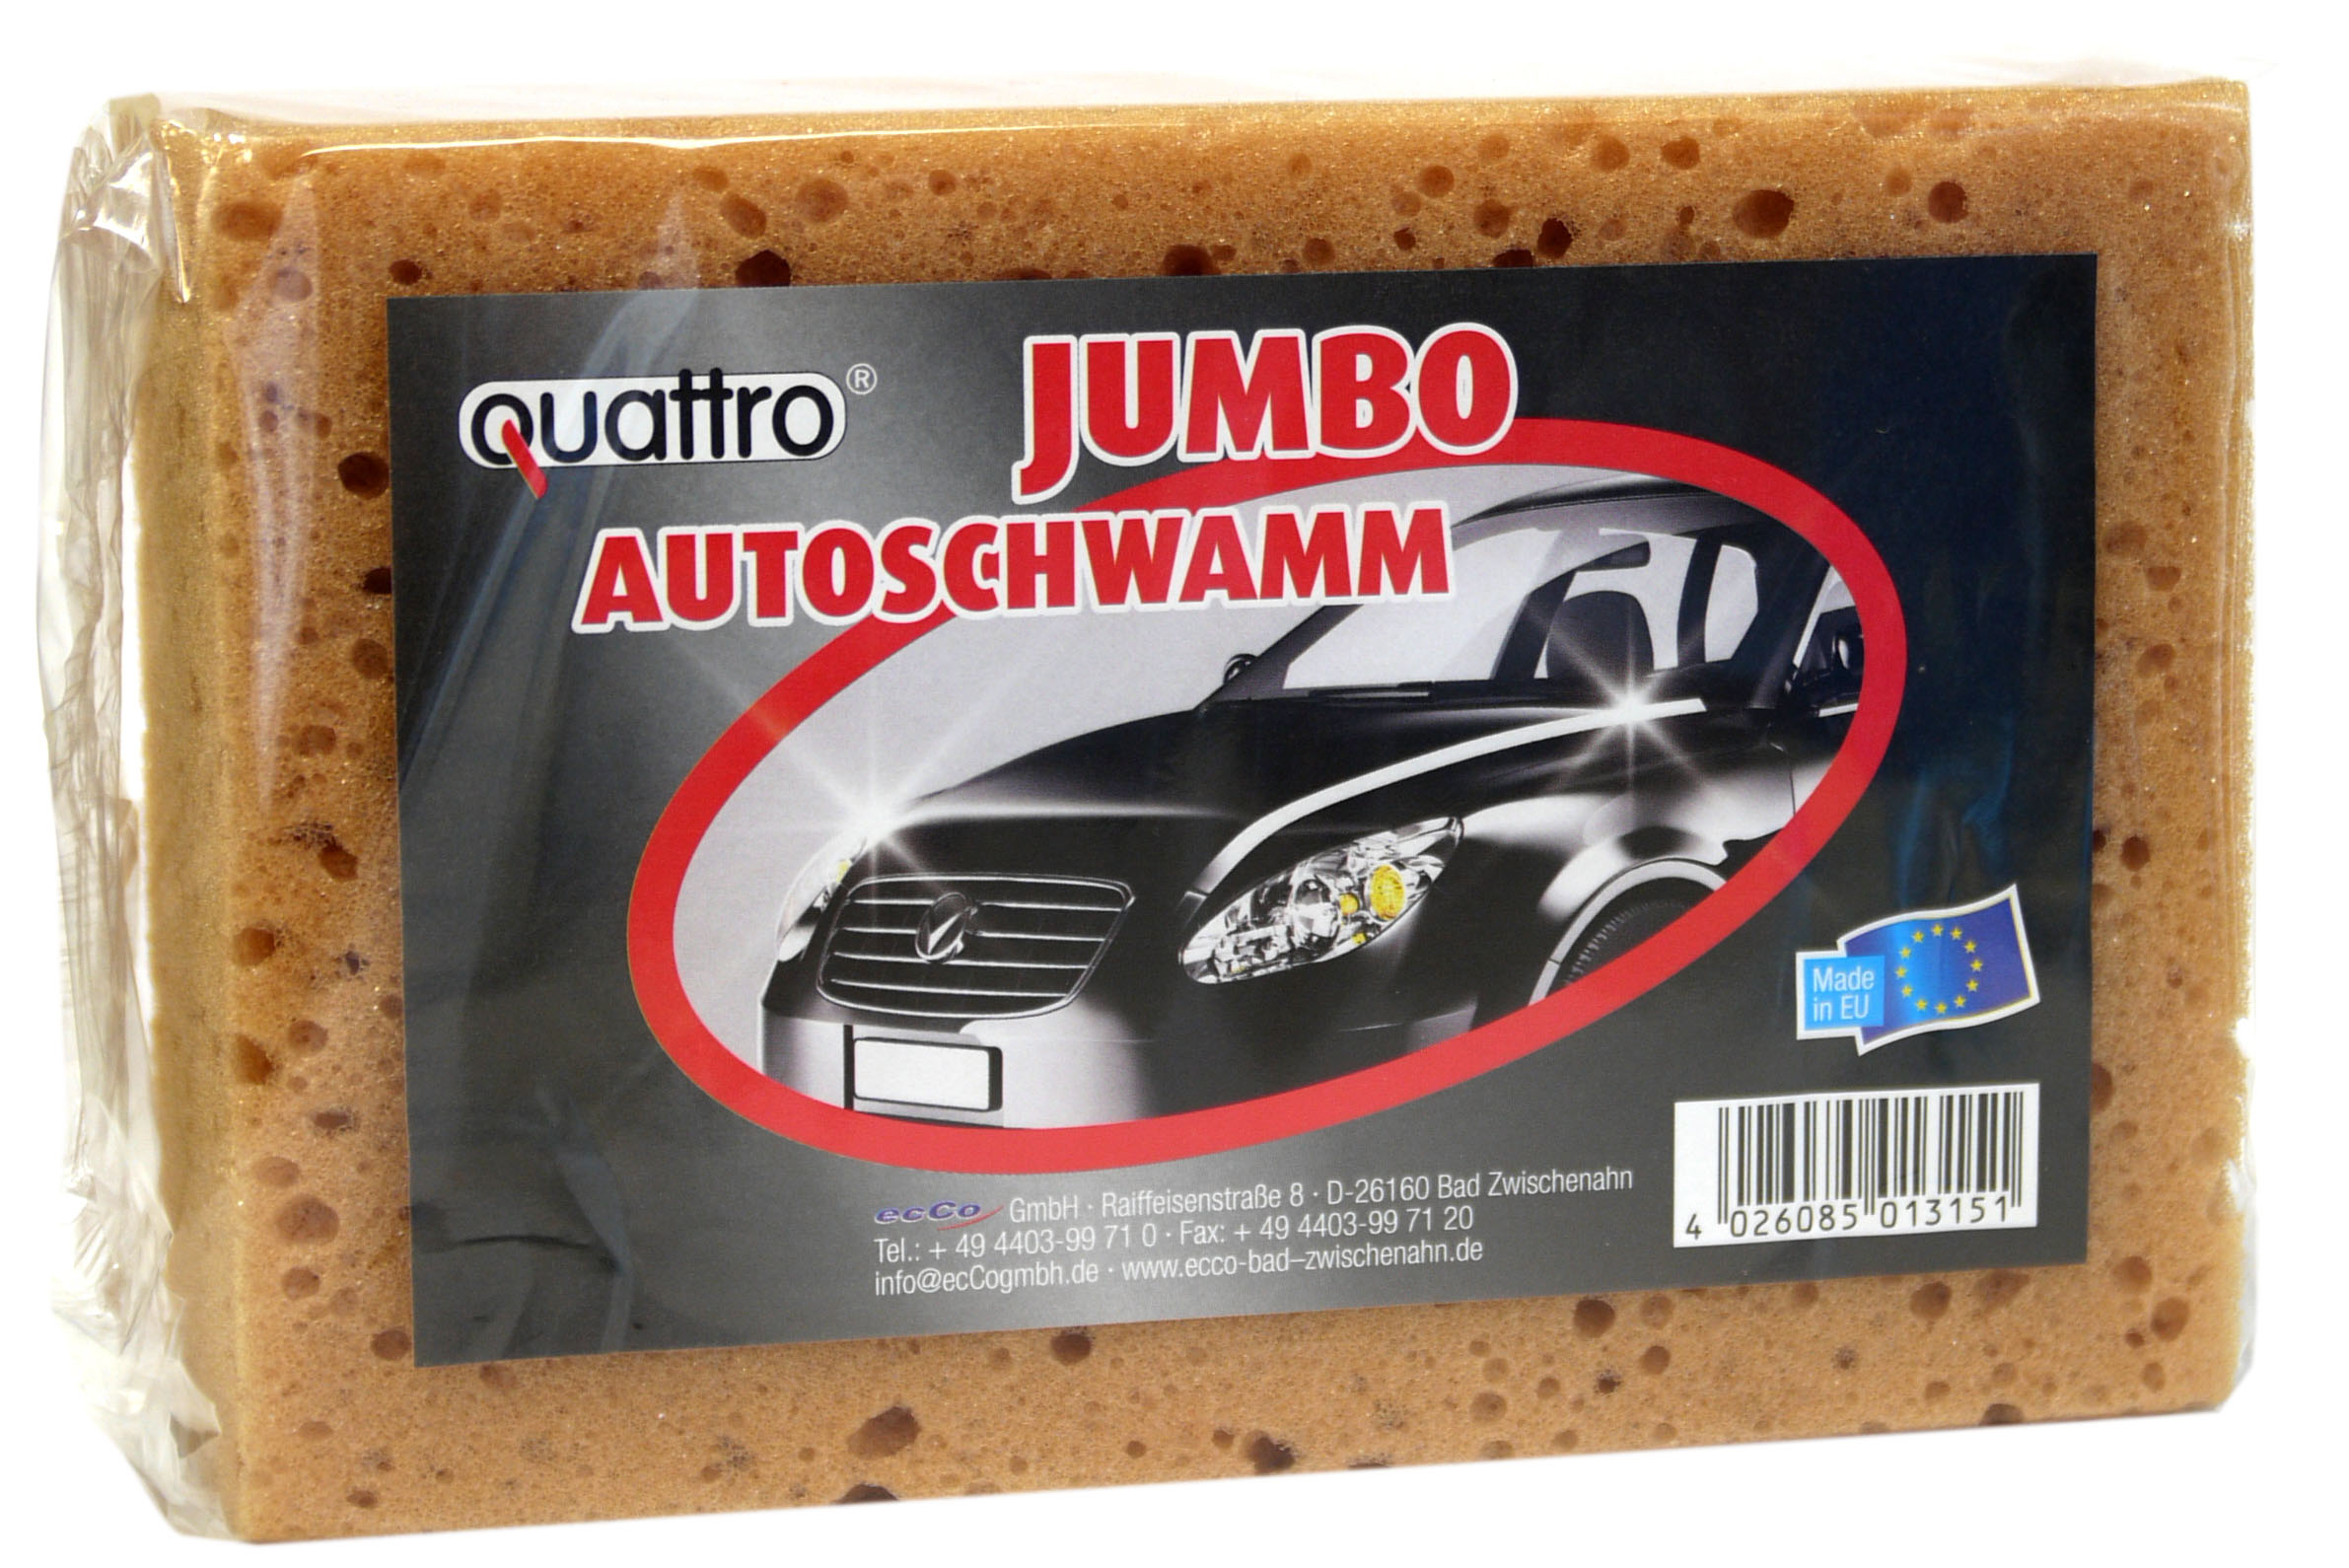 01315 - quattro Jumbo Autoschwamm